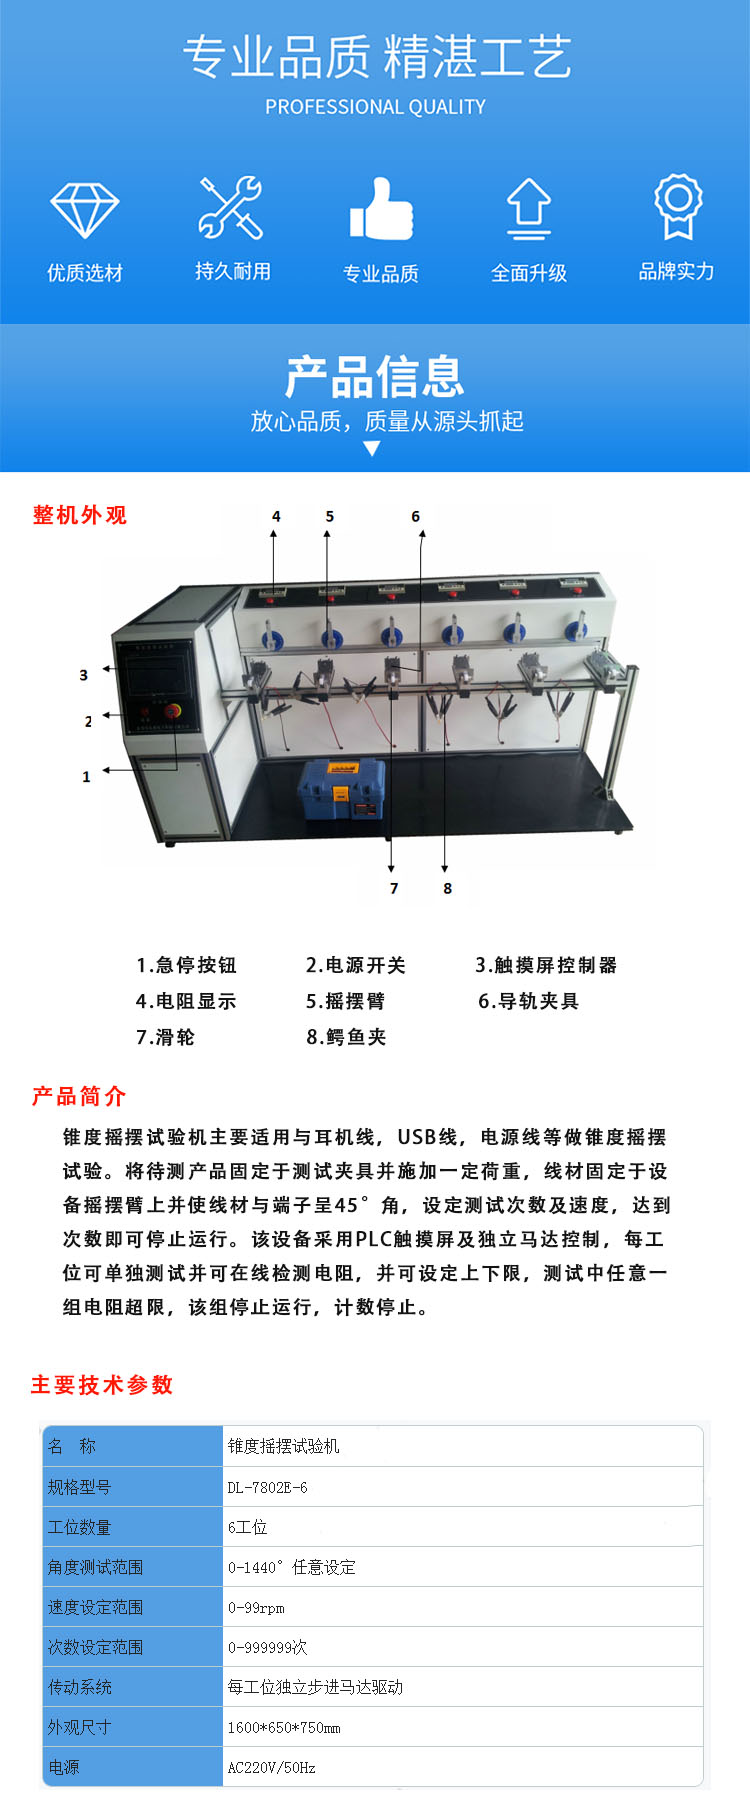 Taper wire bending testing machine, Lainbito LN-7802E swing testing machine, 6-station bending tester